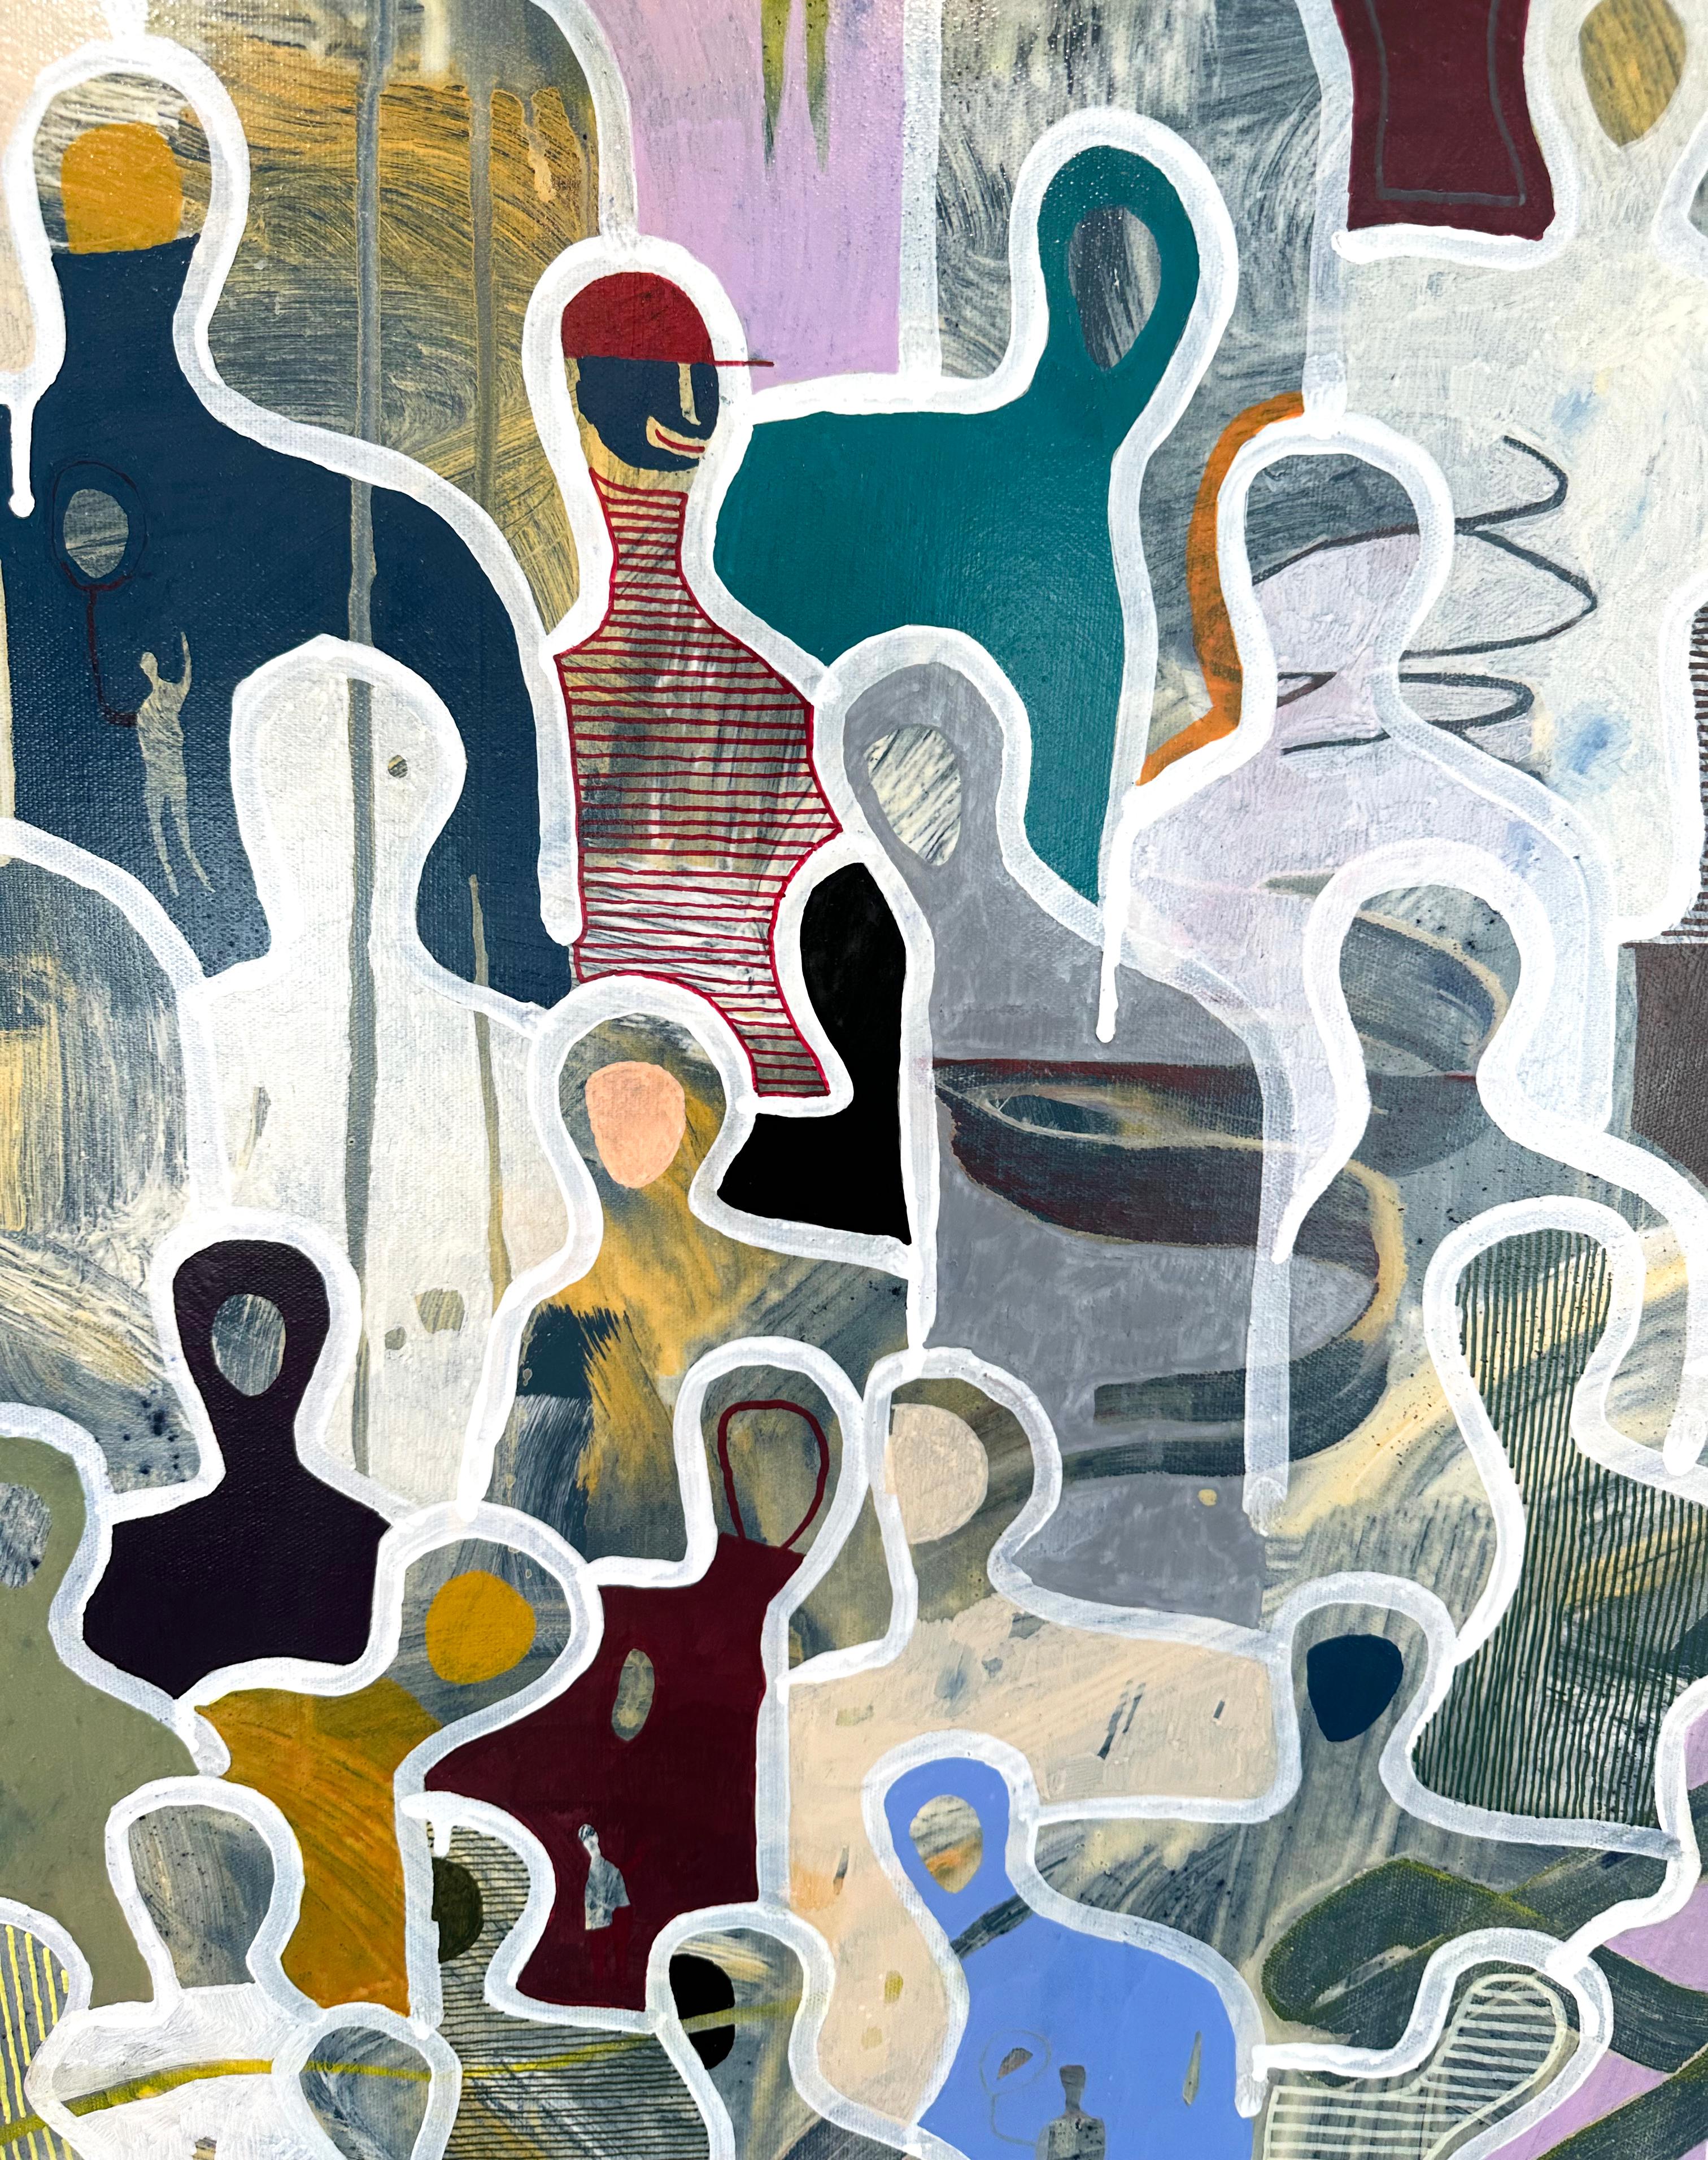 Surrounded by Friends by Gaetan de Seguin - Figurative contemporary Painting - Gray Figurative Painting by Gaëtan de Seguin